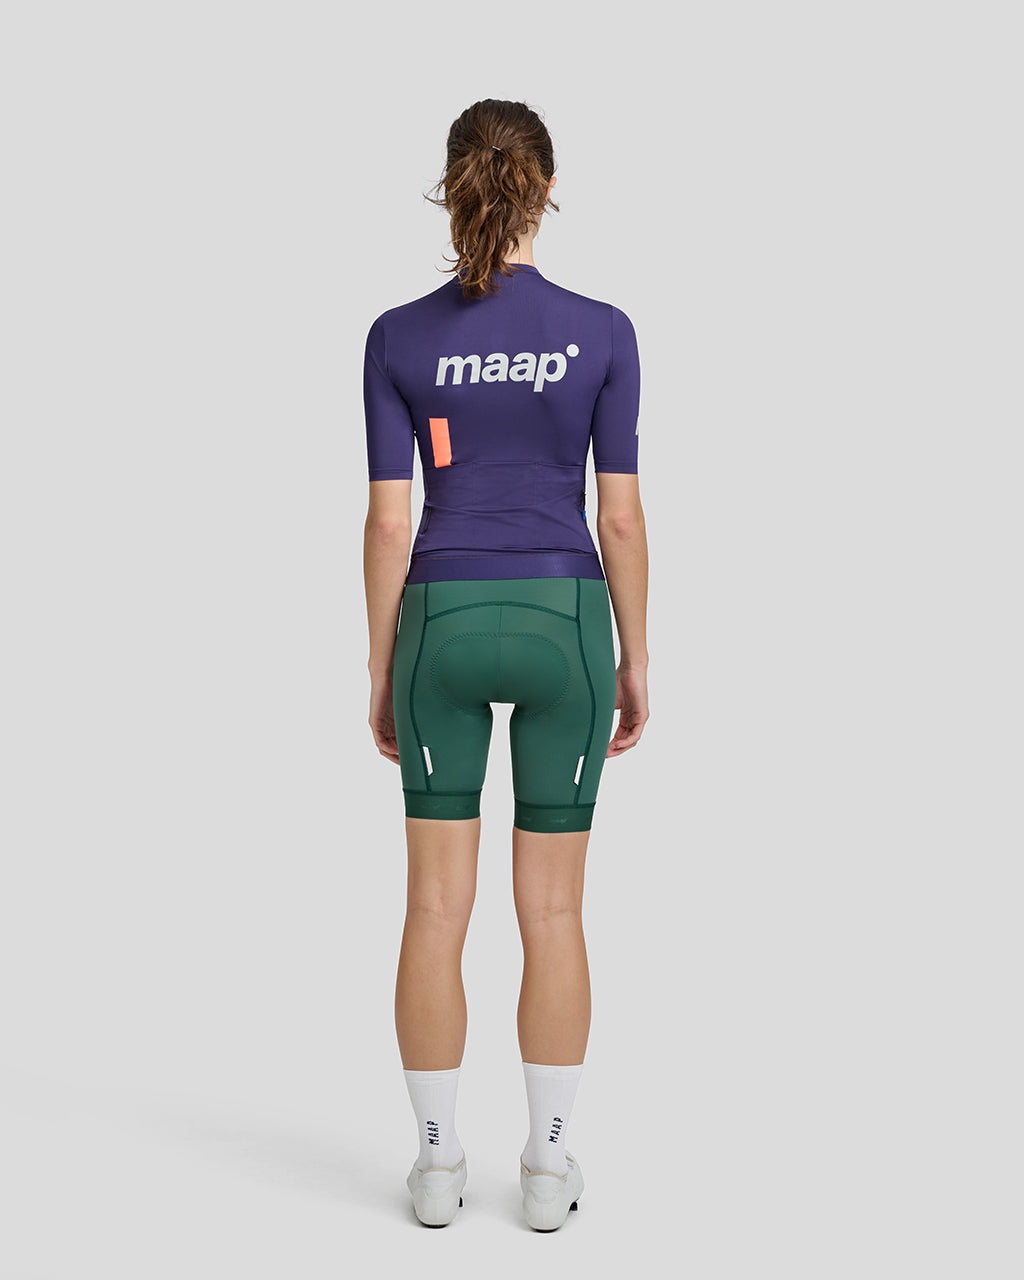 Women's Training Jersey - MAAP Cycling Apparel